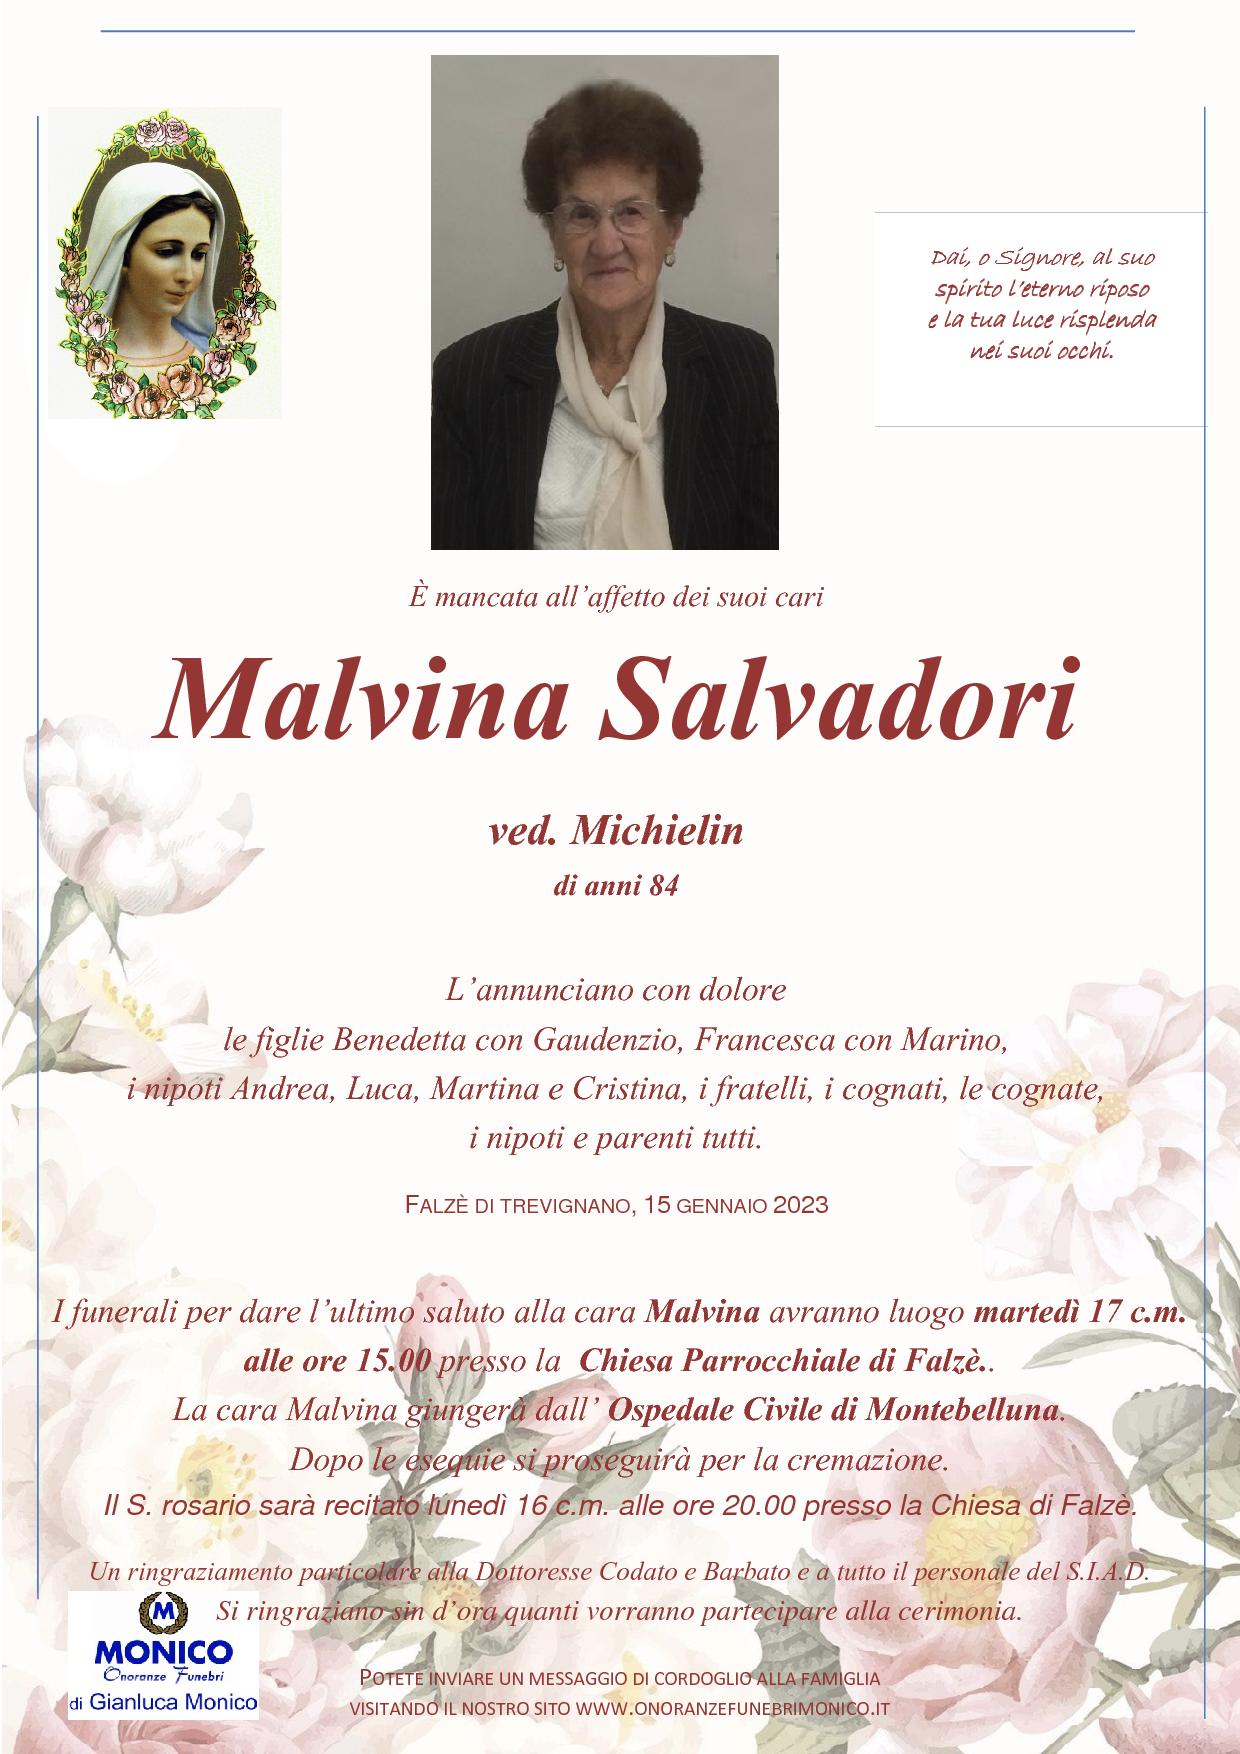 Salvadori Malvina